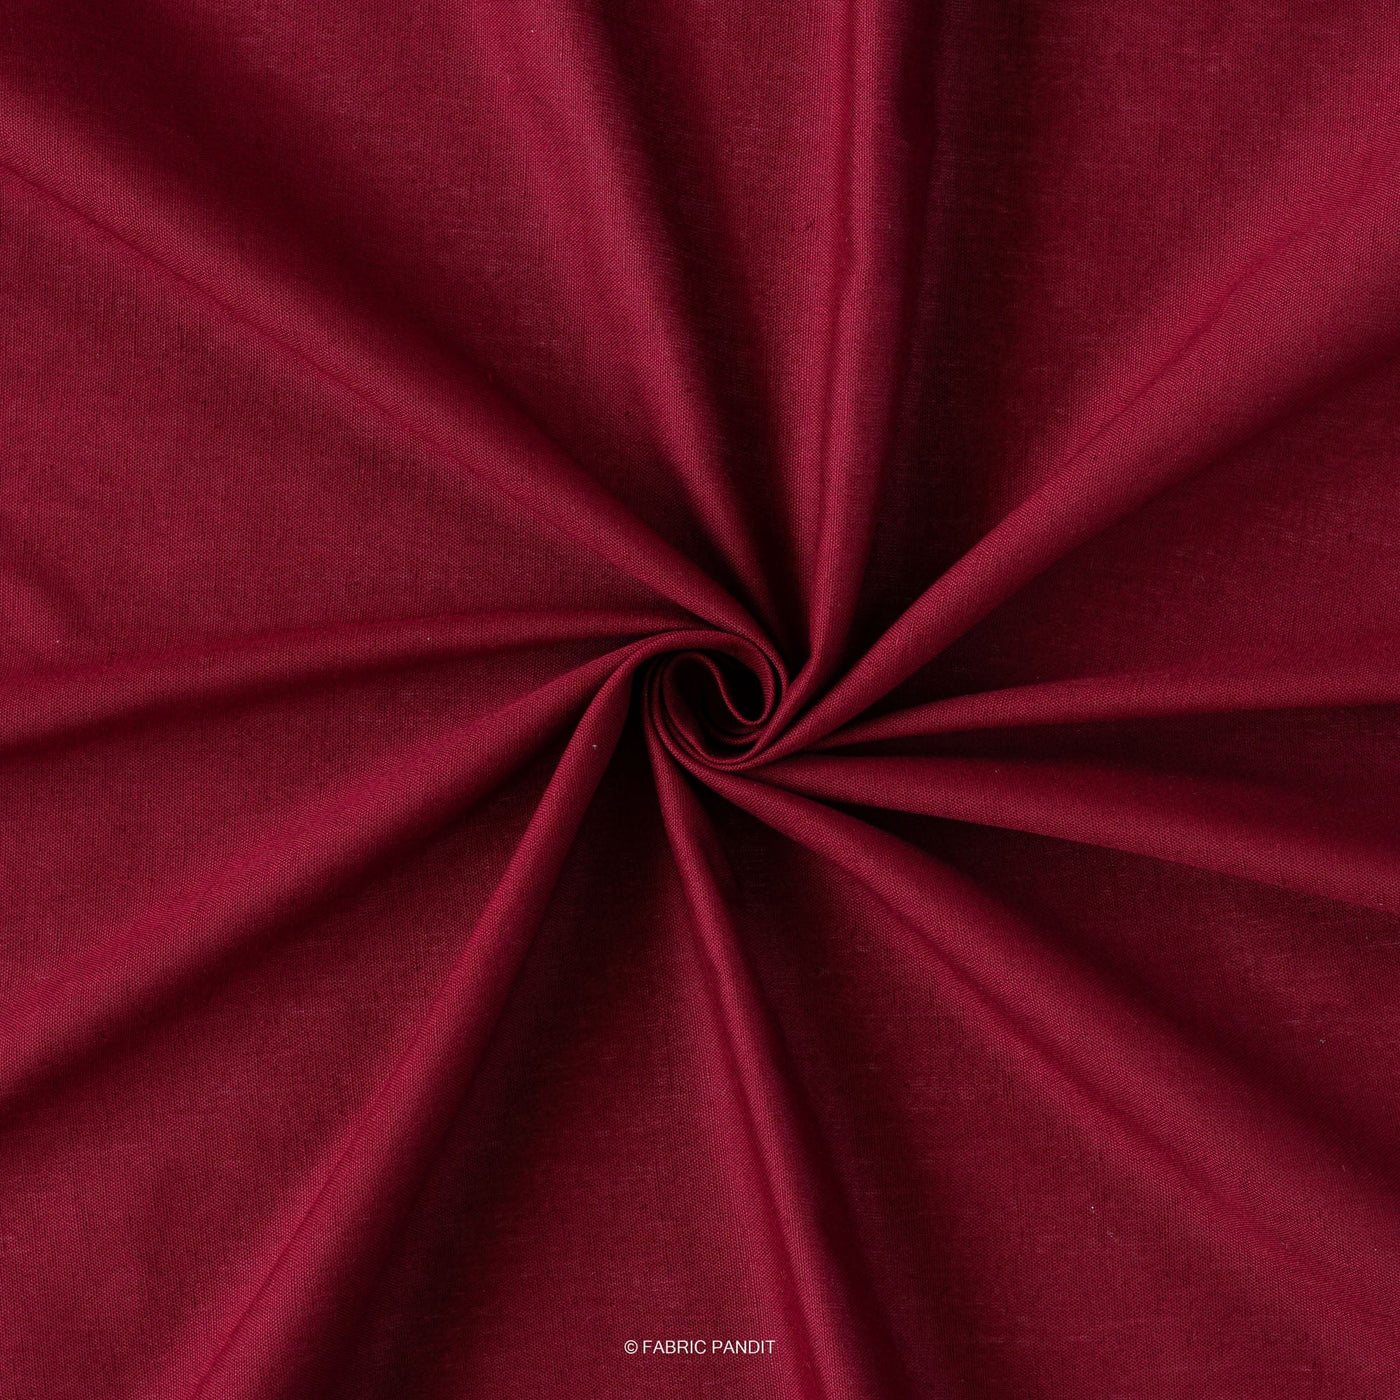 Fabric Pandit Fabric Merlot Red Color Pure Cotton Linen Fabric